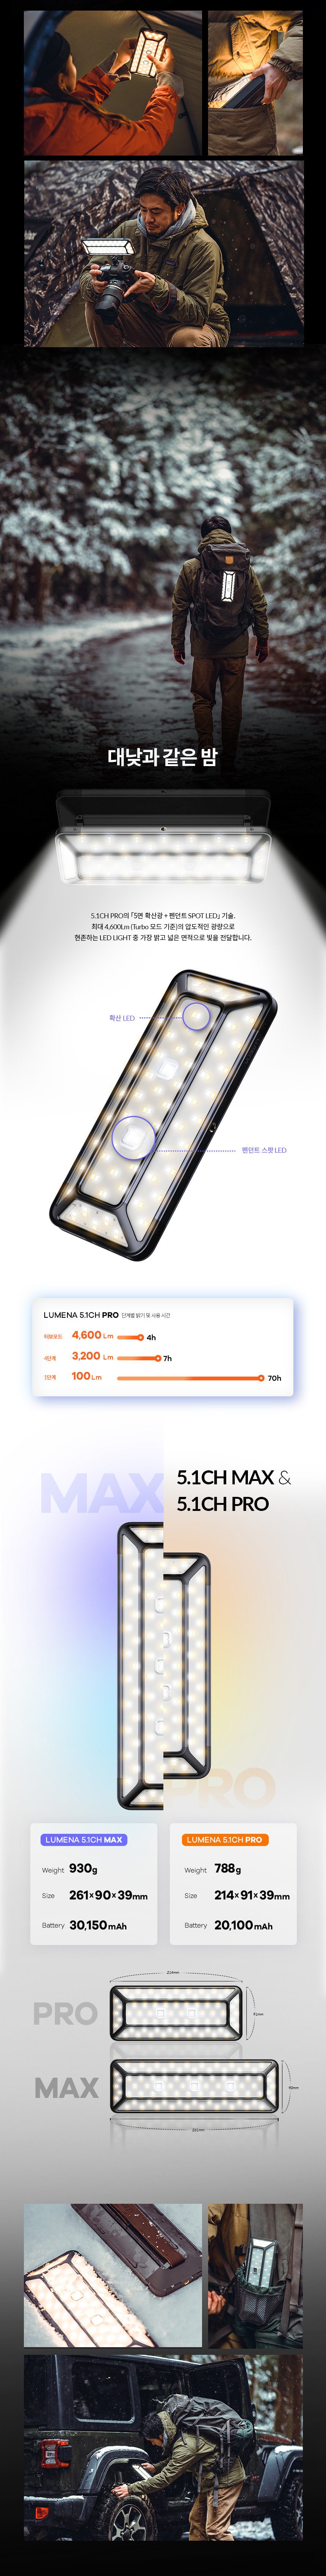 Lumena - 5.1CH PRO 4600流明大容量行動電源LED燈｜露營燈｜聚光燈 - 深藍色